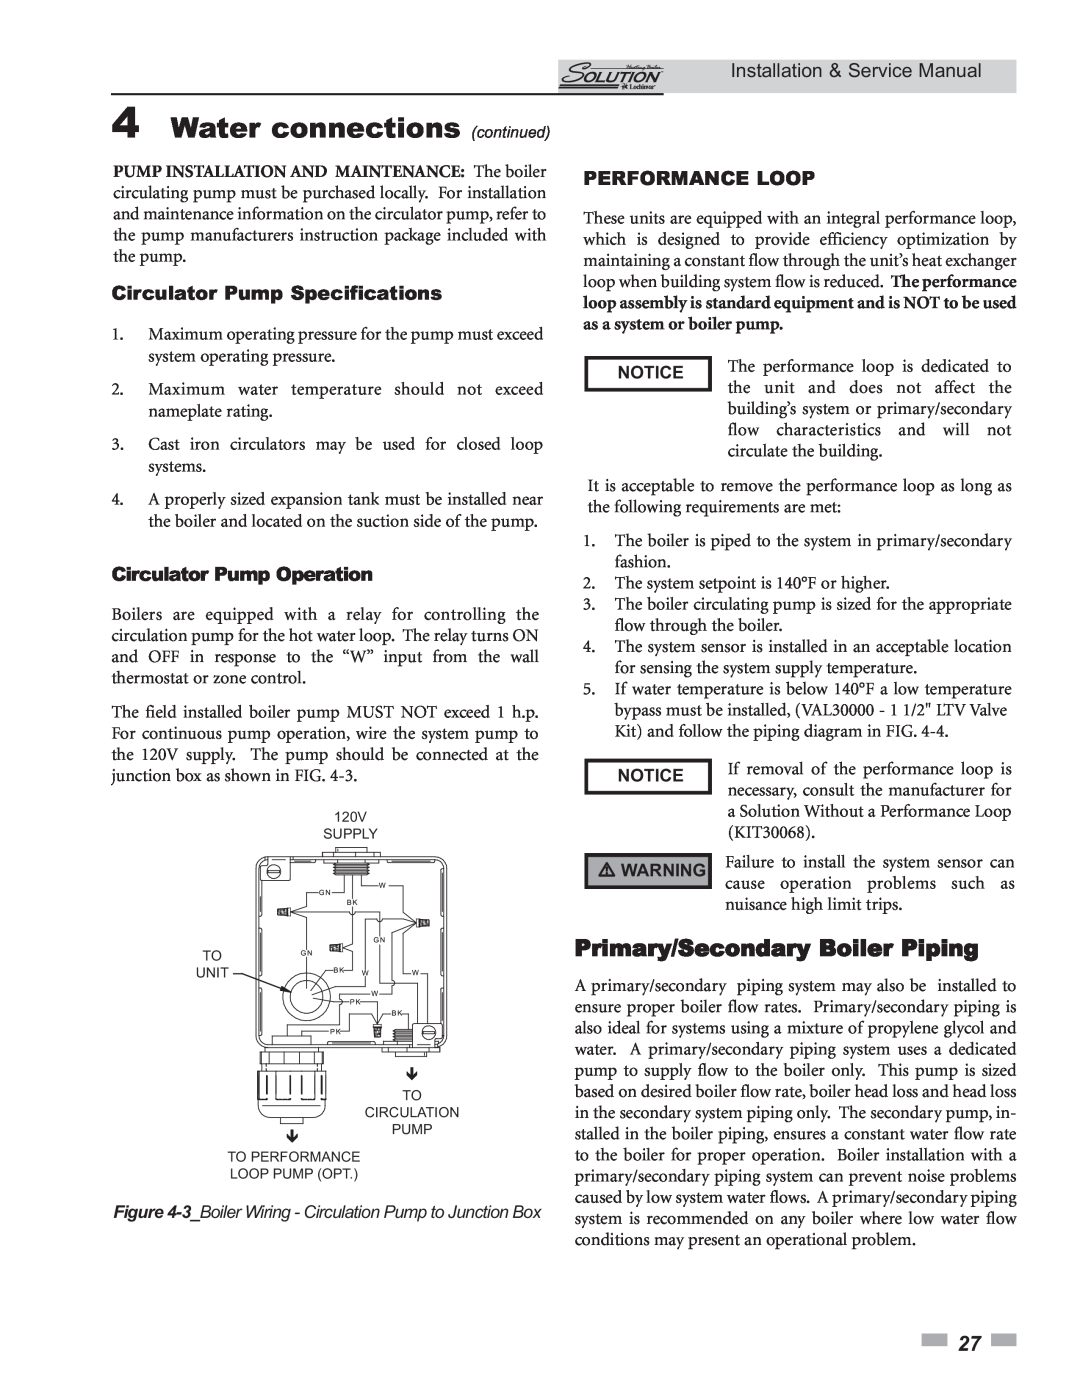 Lochinvar 45 Primary/Secondary Boiler Piping, Circulator Pump Specifications, Circulator Pump Operation, Performance Loop 